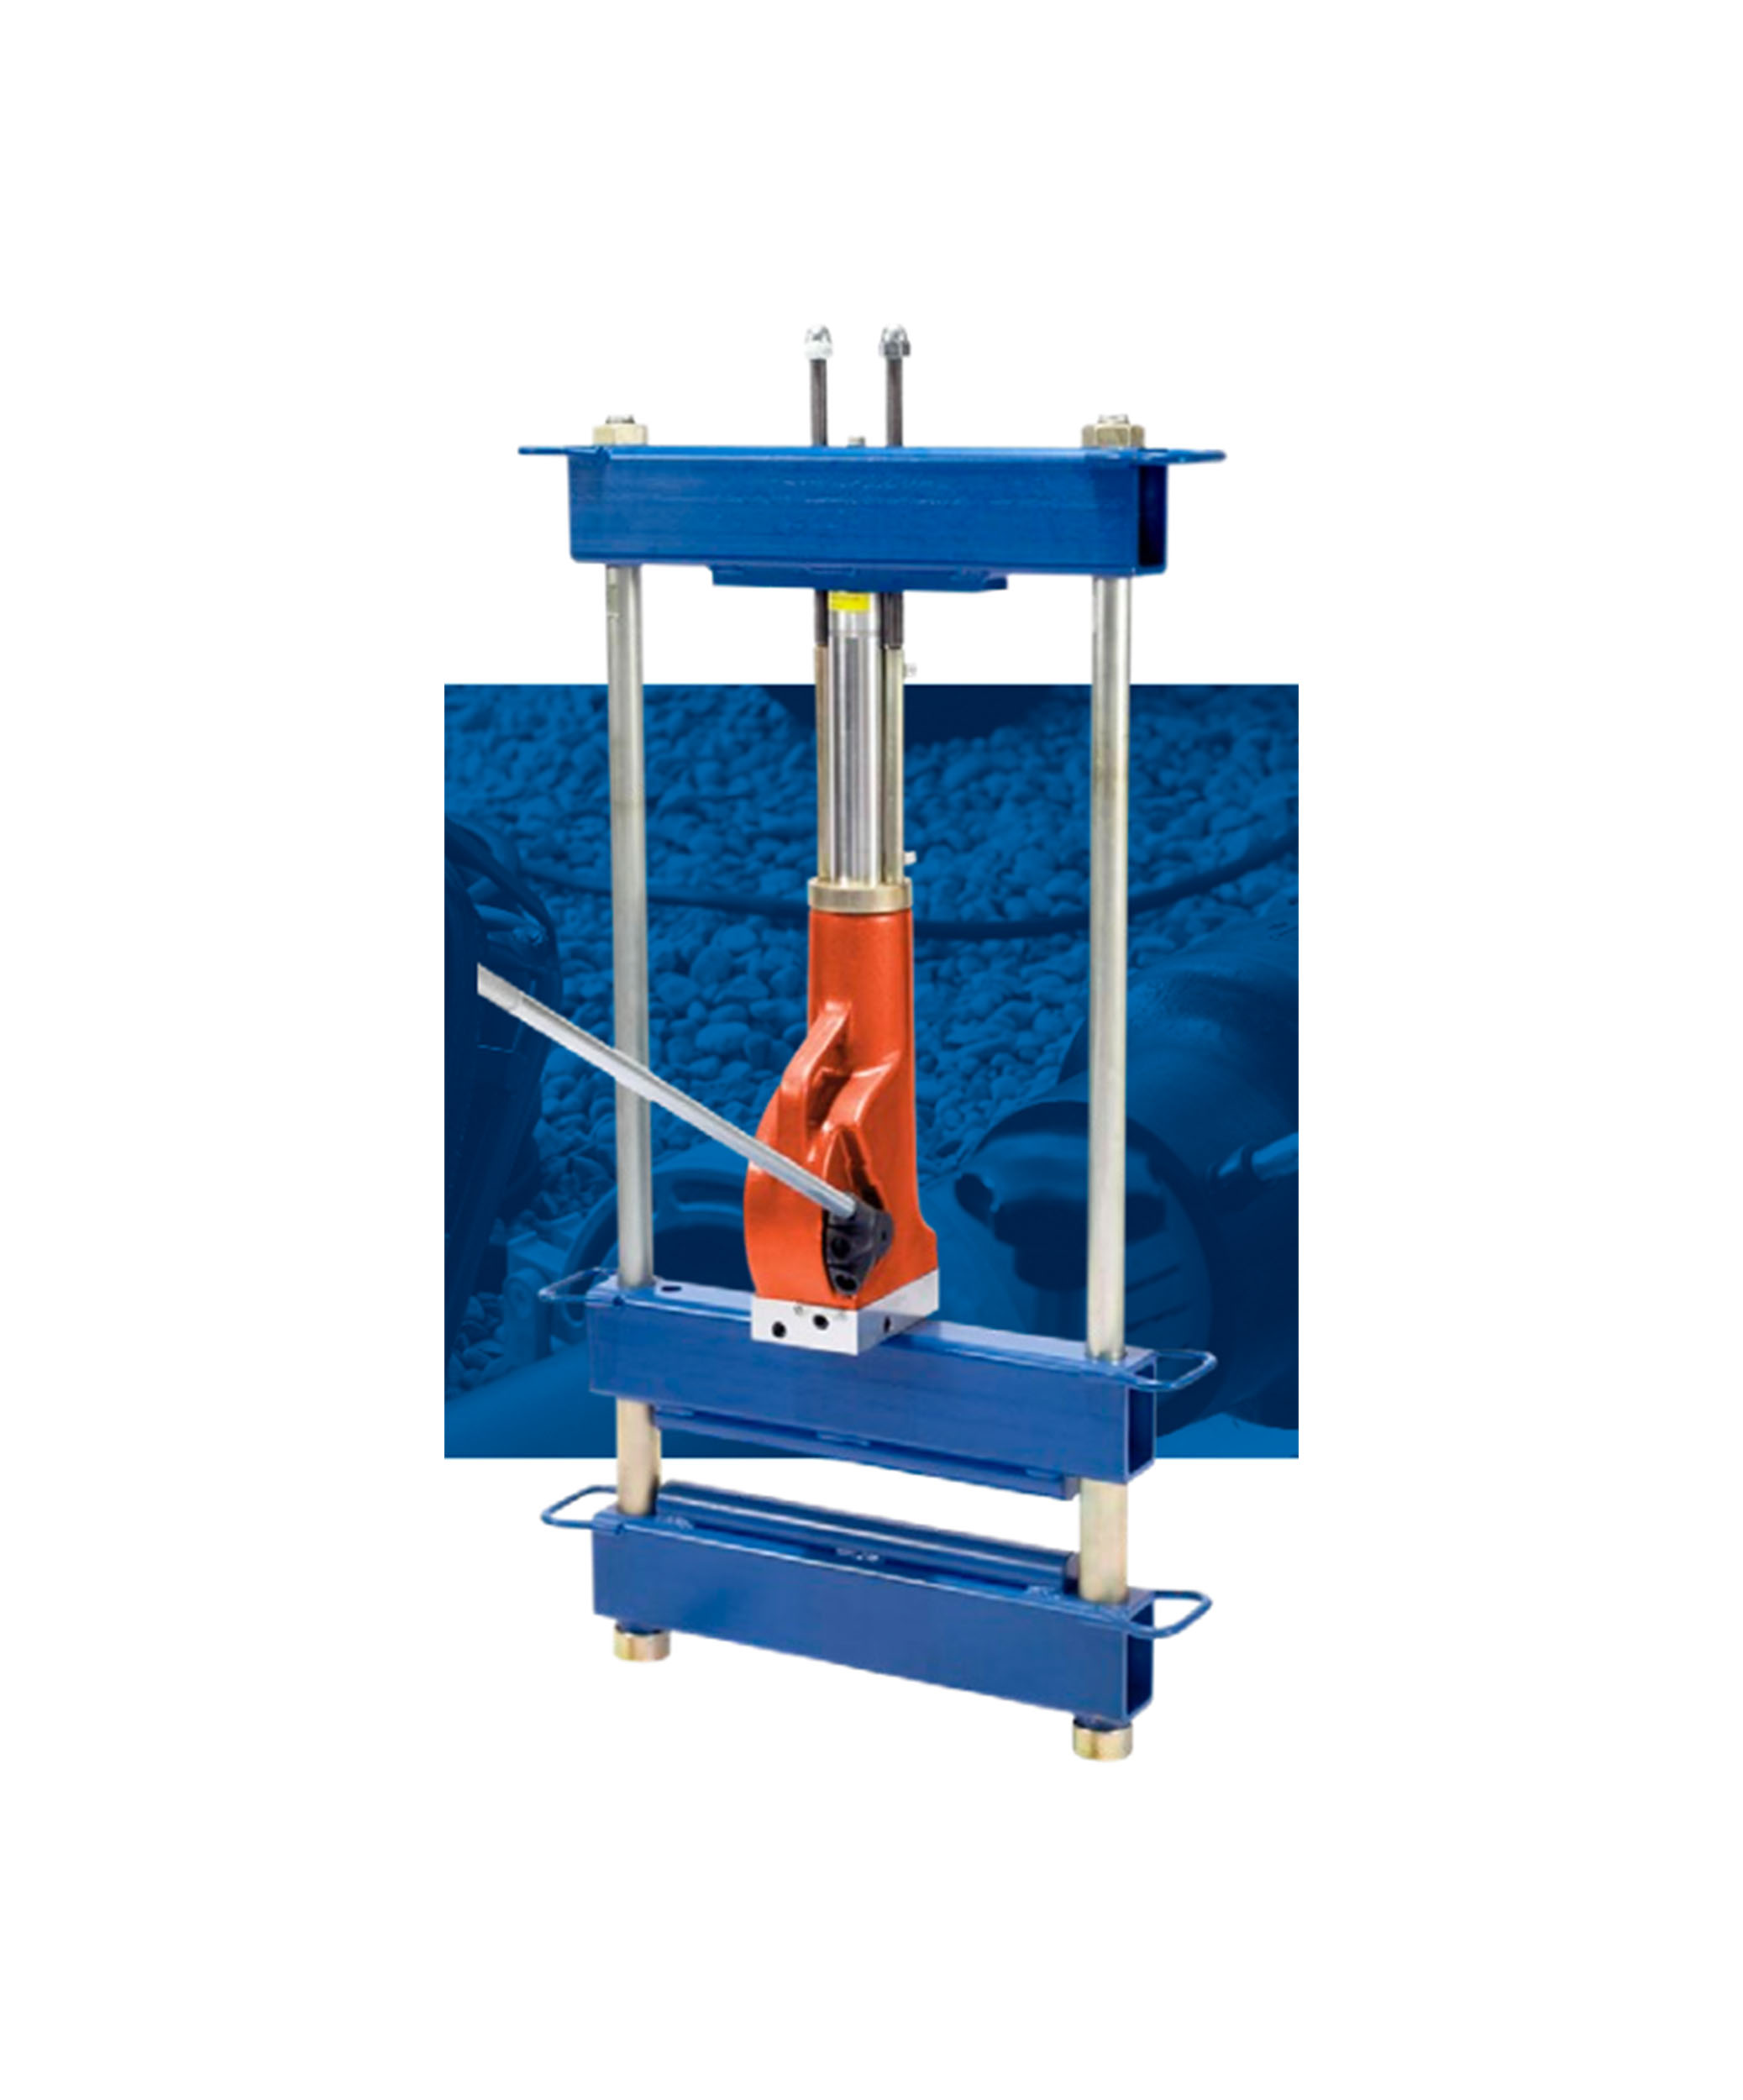 Hydraulic Pipe Press Tools (200-315mm) - Tonisco